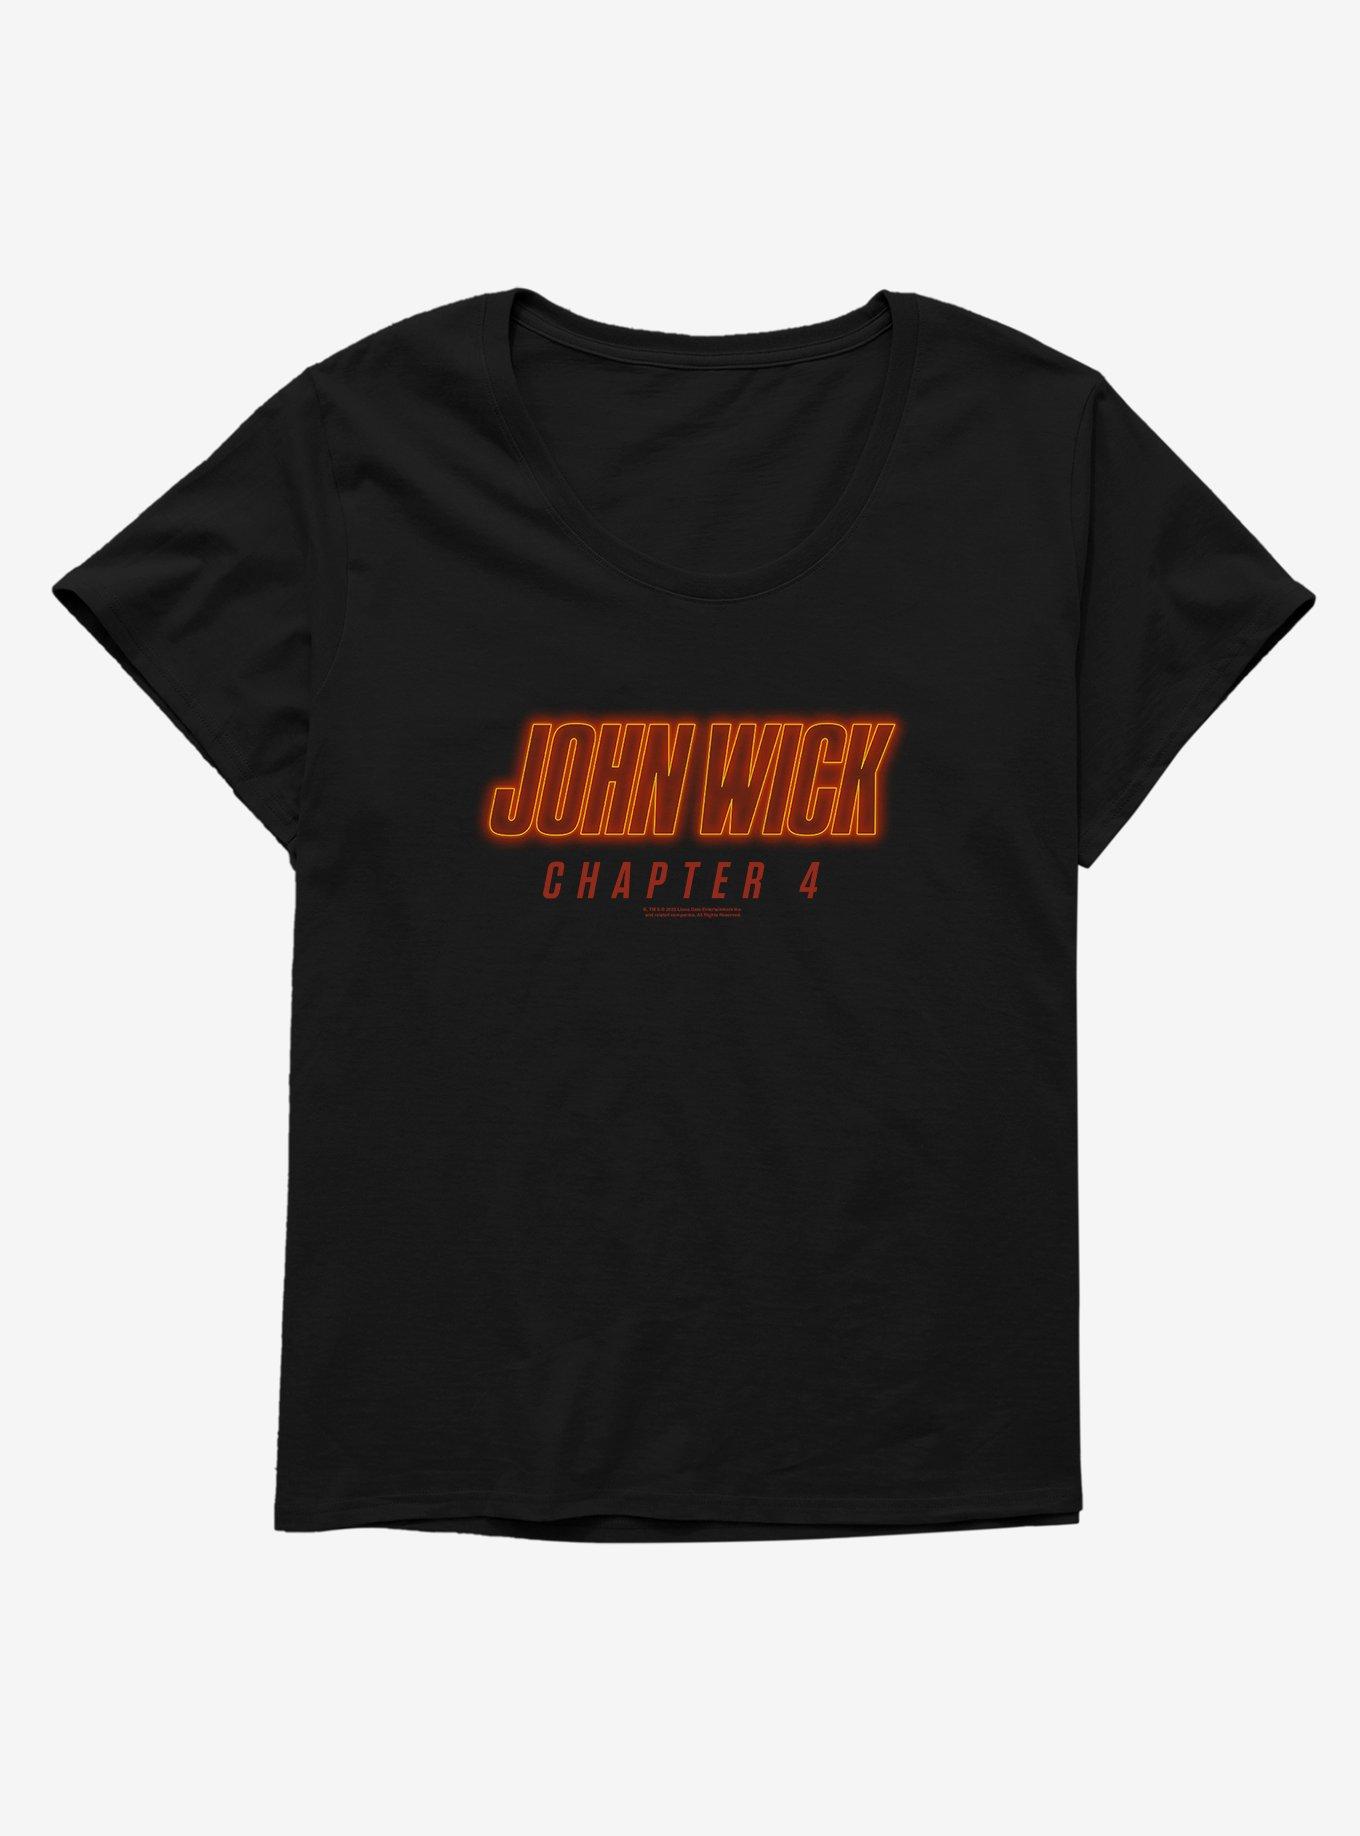 John Wick: Chapter 4 Title Logo Womens T-Shirt Plus Size, BLACK, hi-res